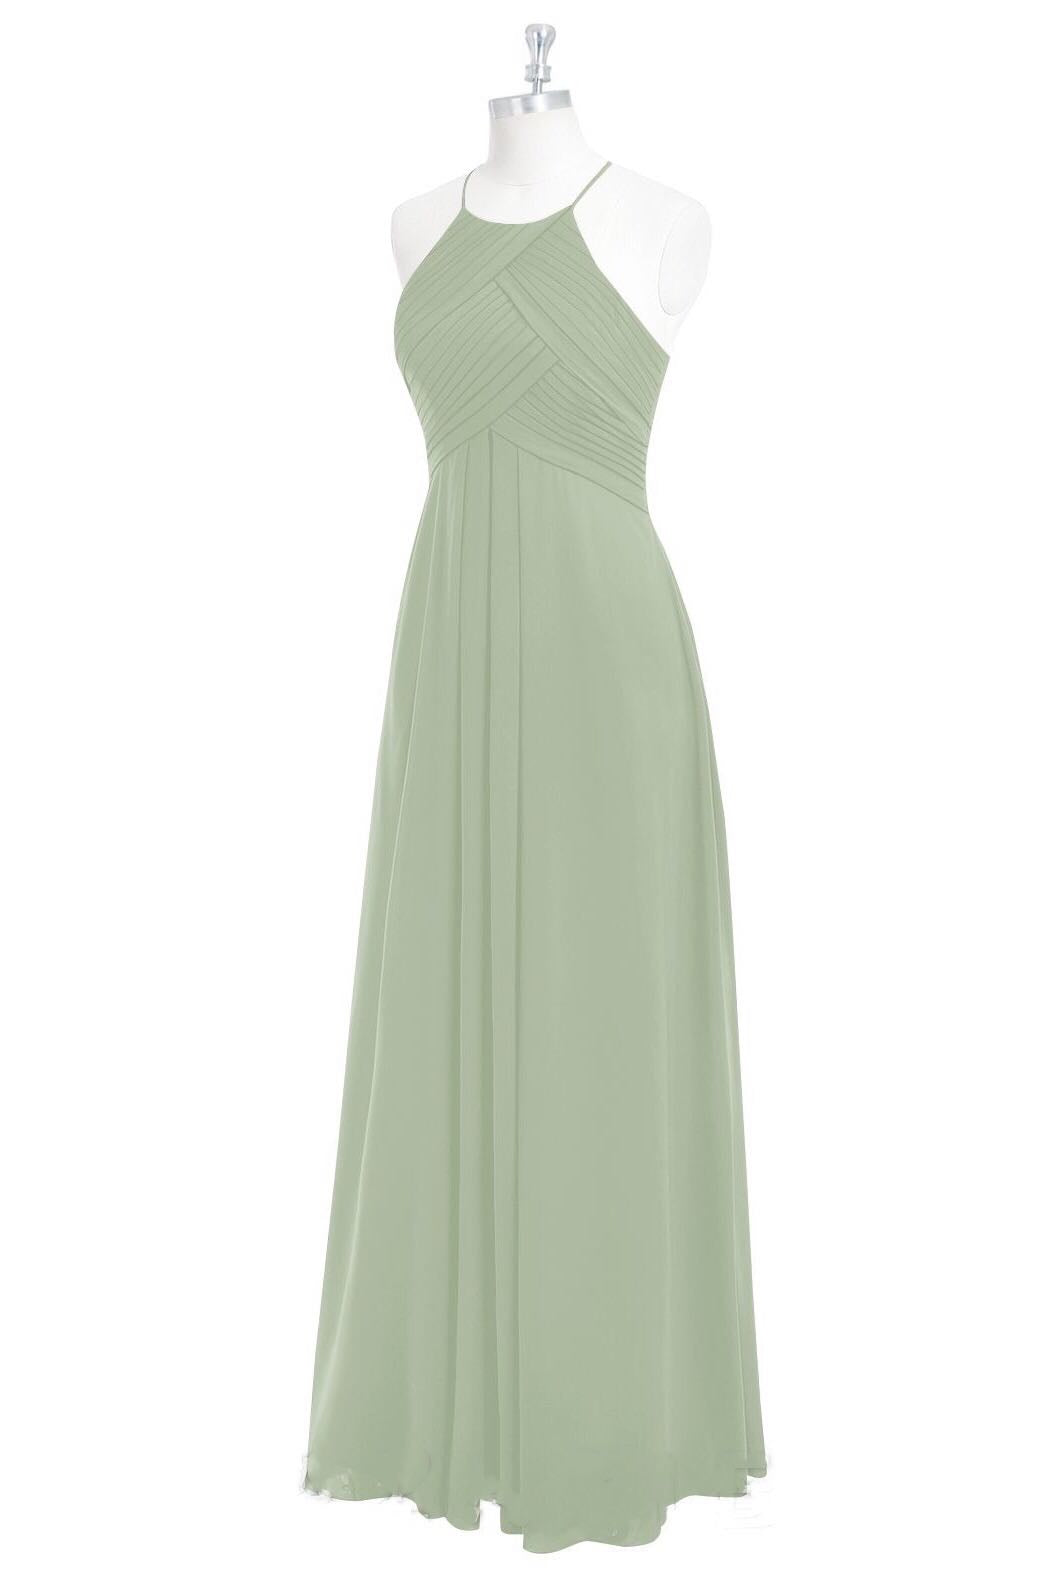 Sage Green Halter A-Line Long Bridesmaid Dress